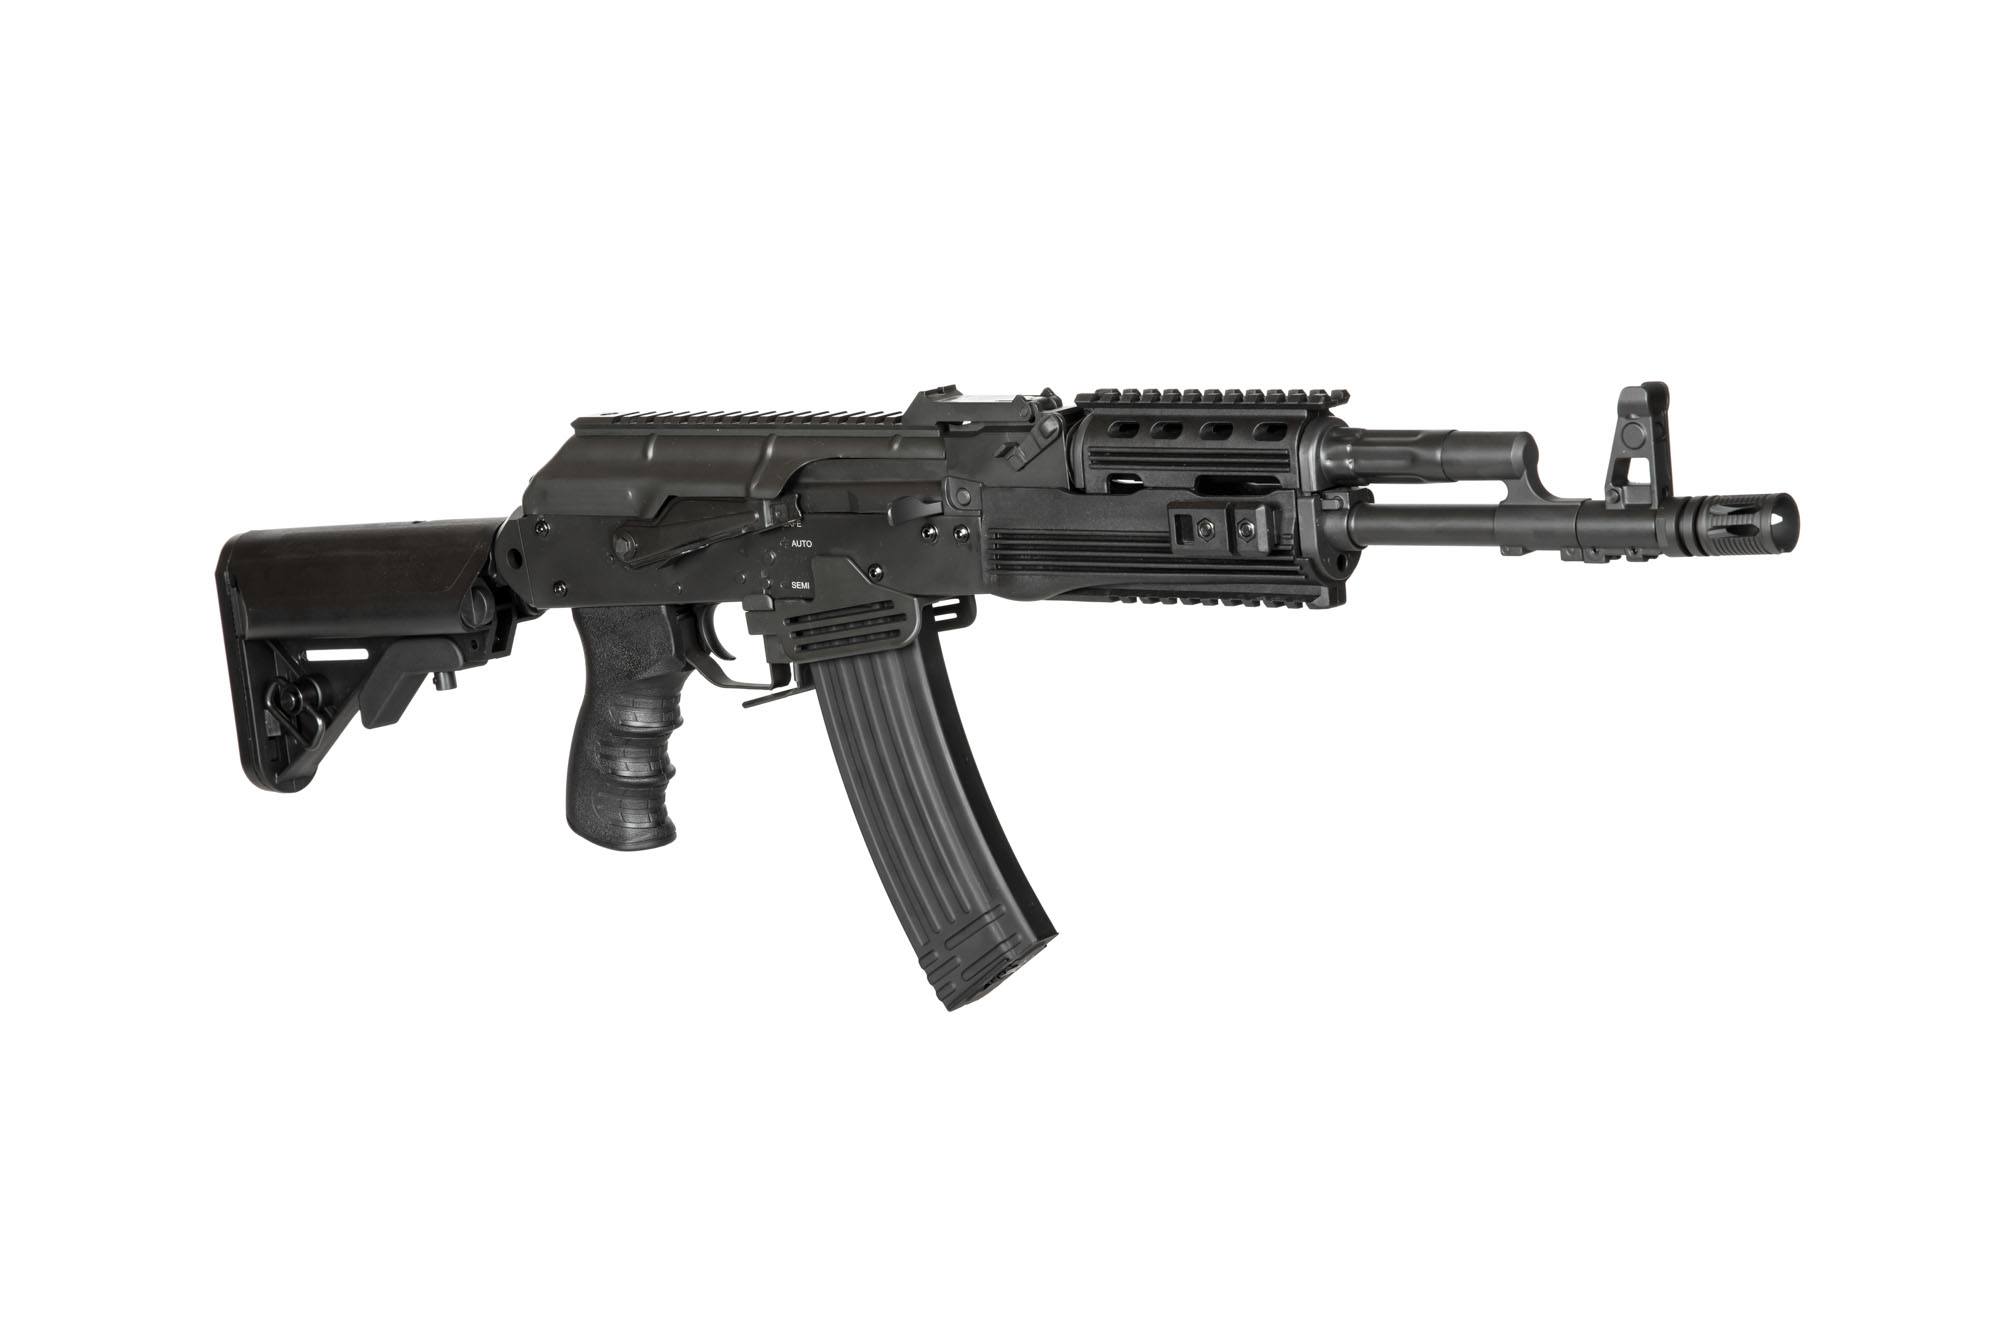 ASK209 Tactical EBB assault rifle